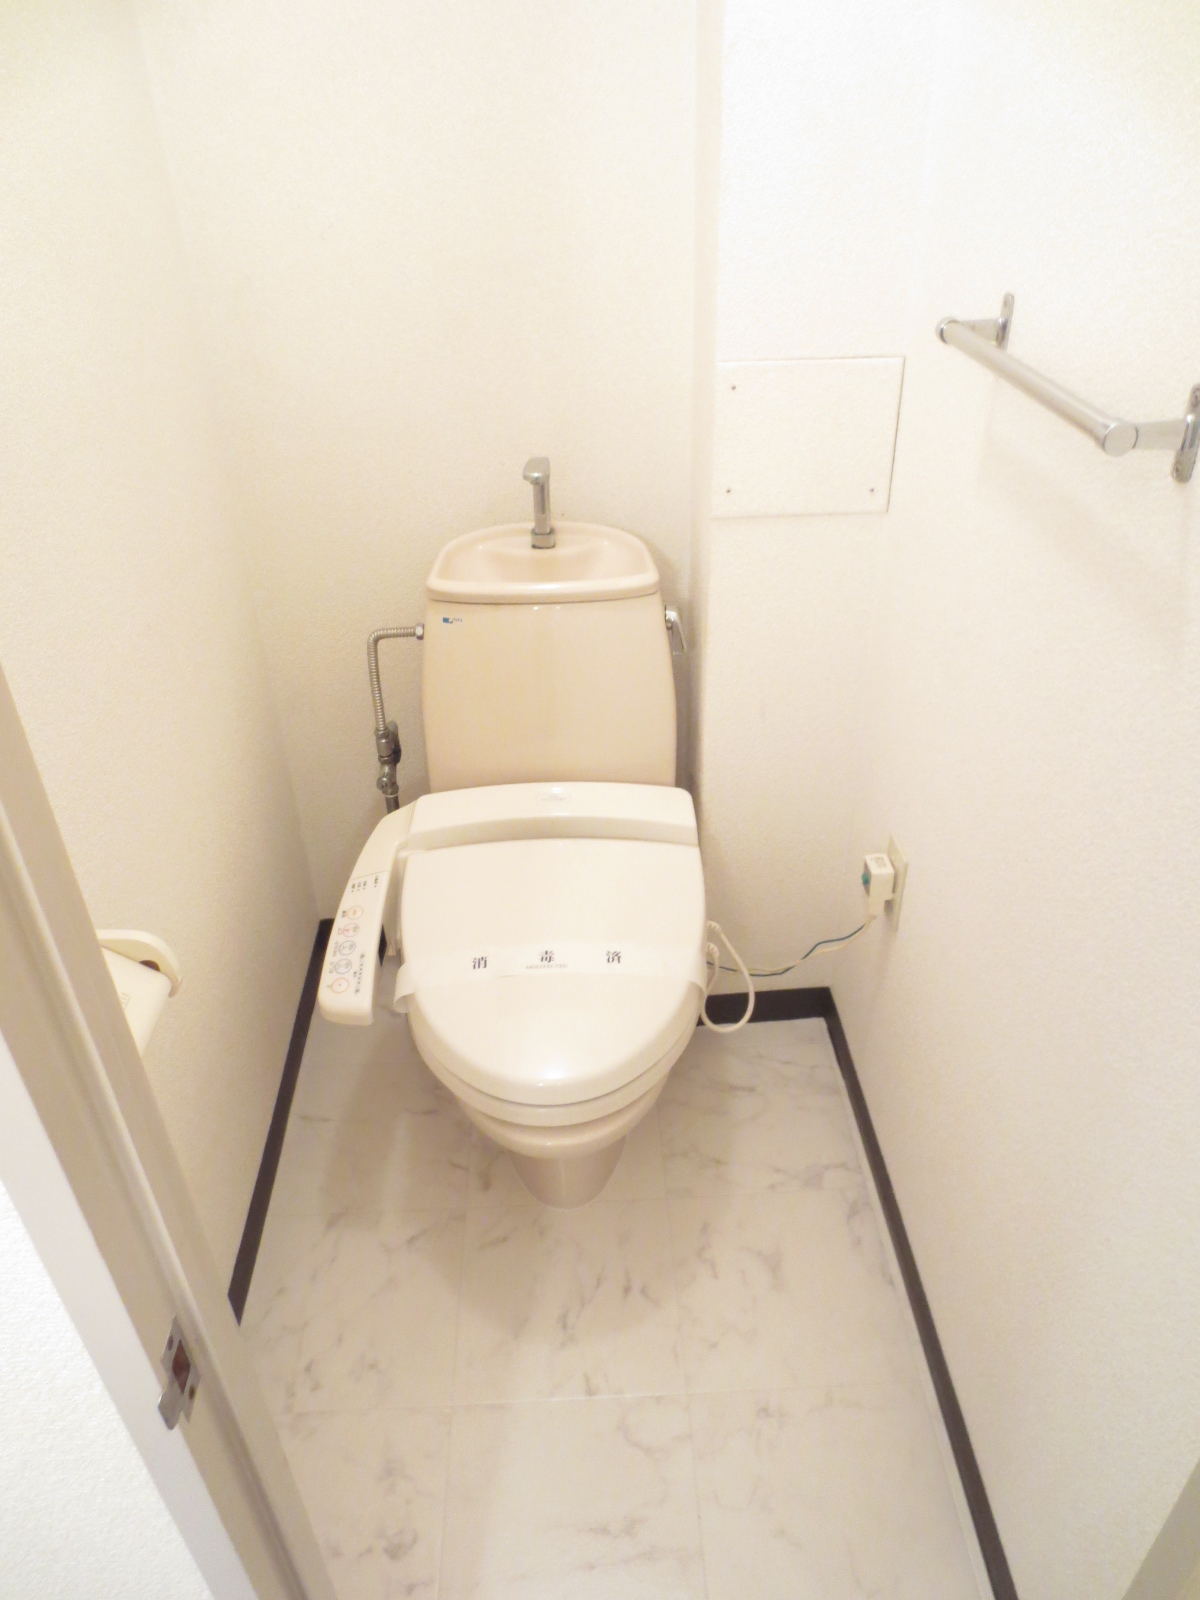 Toilet. It is a warm water washing toilet seat!